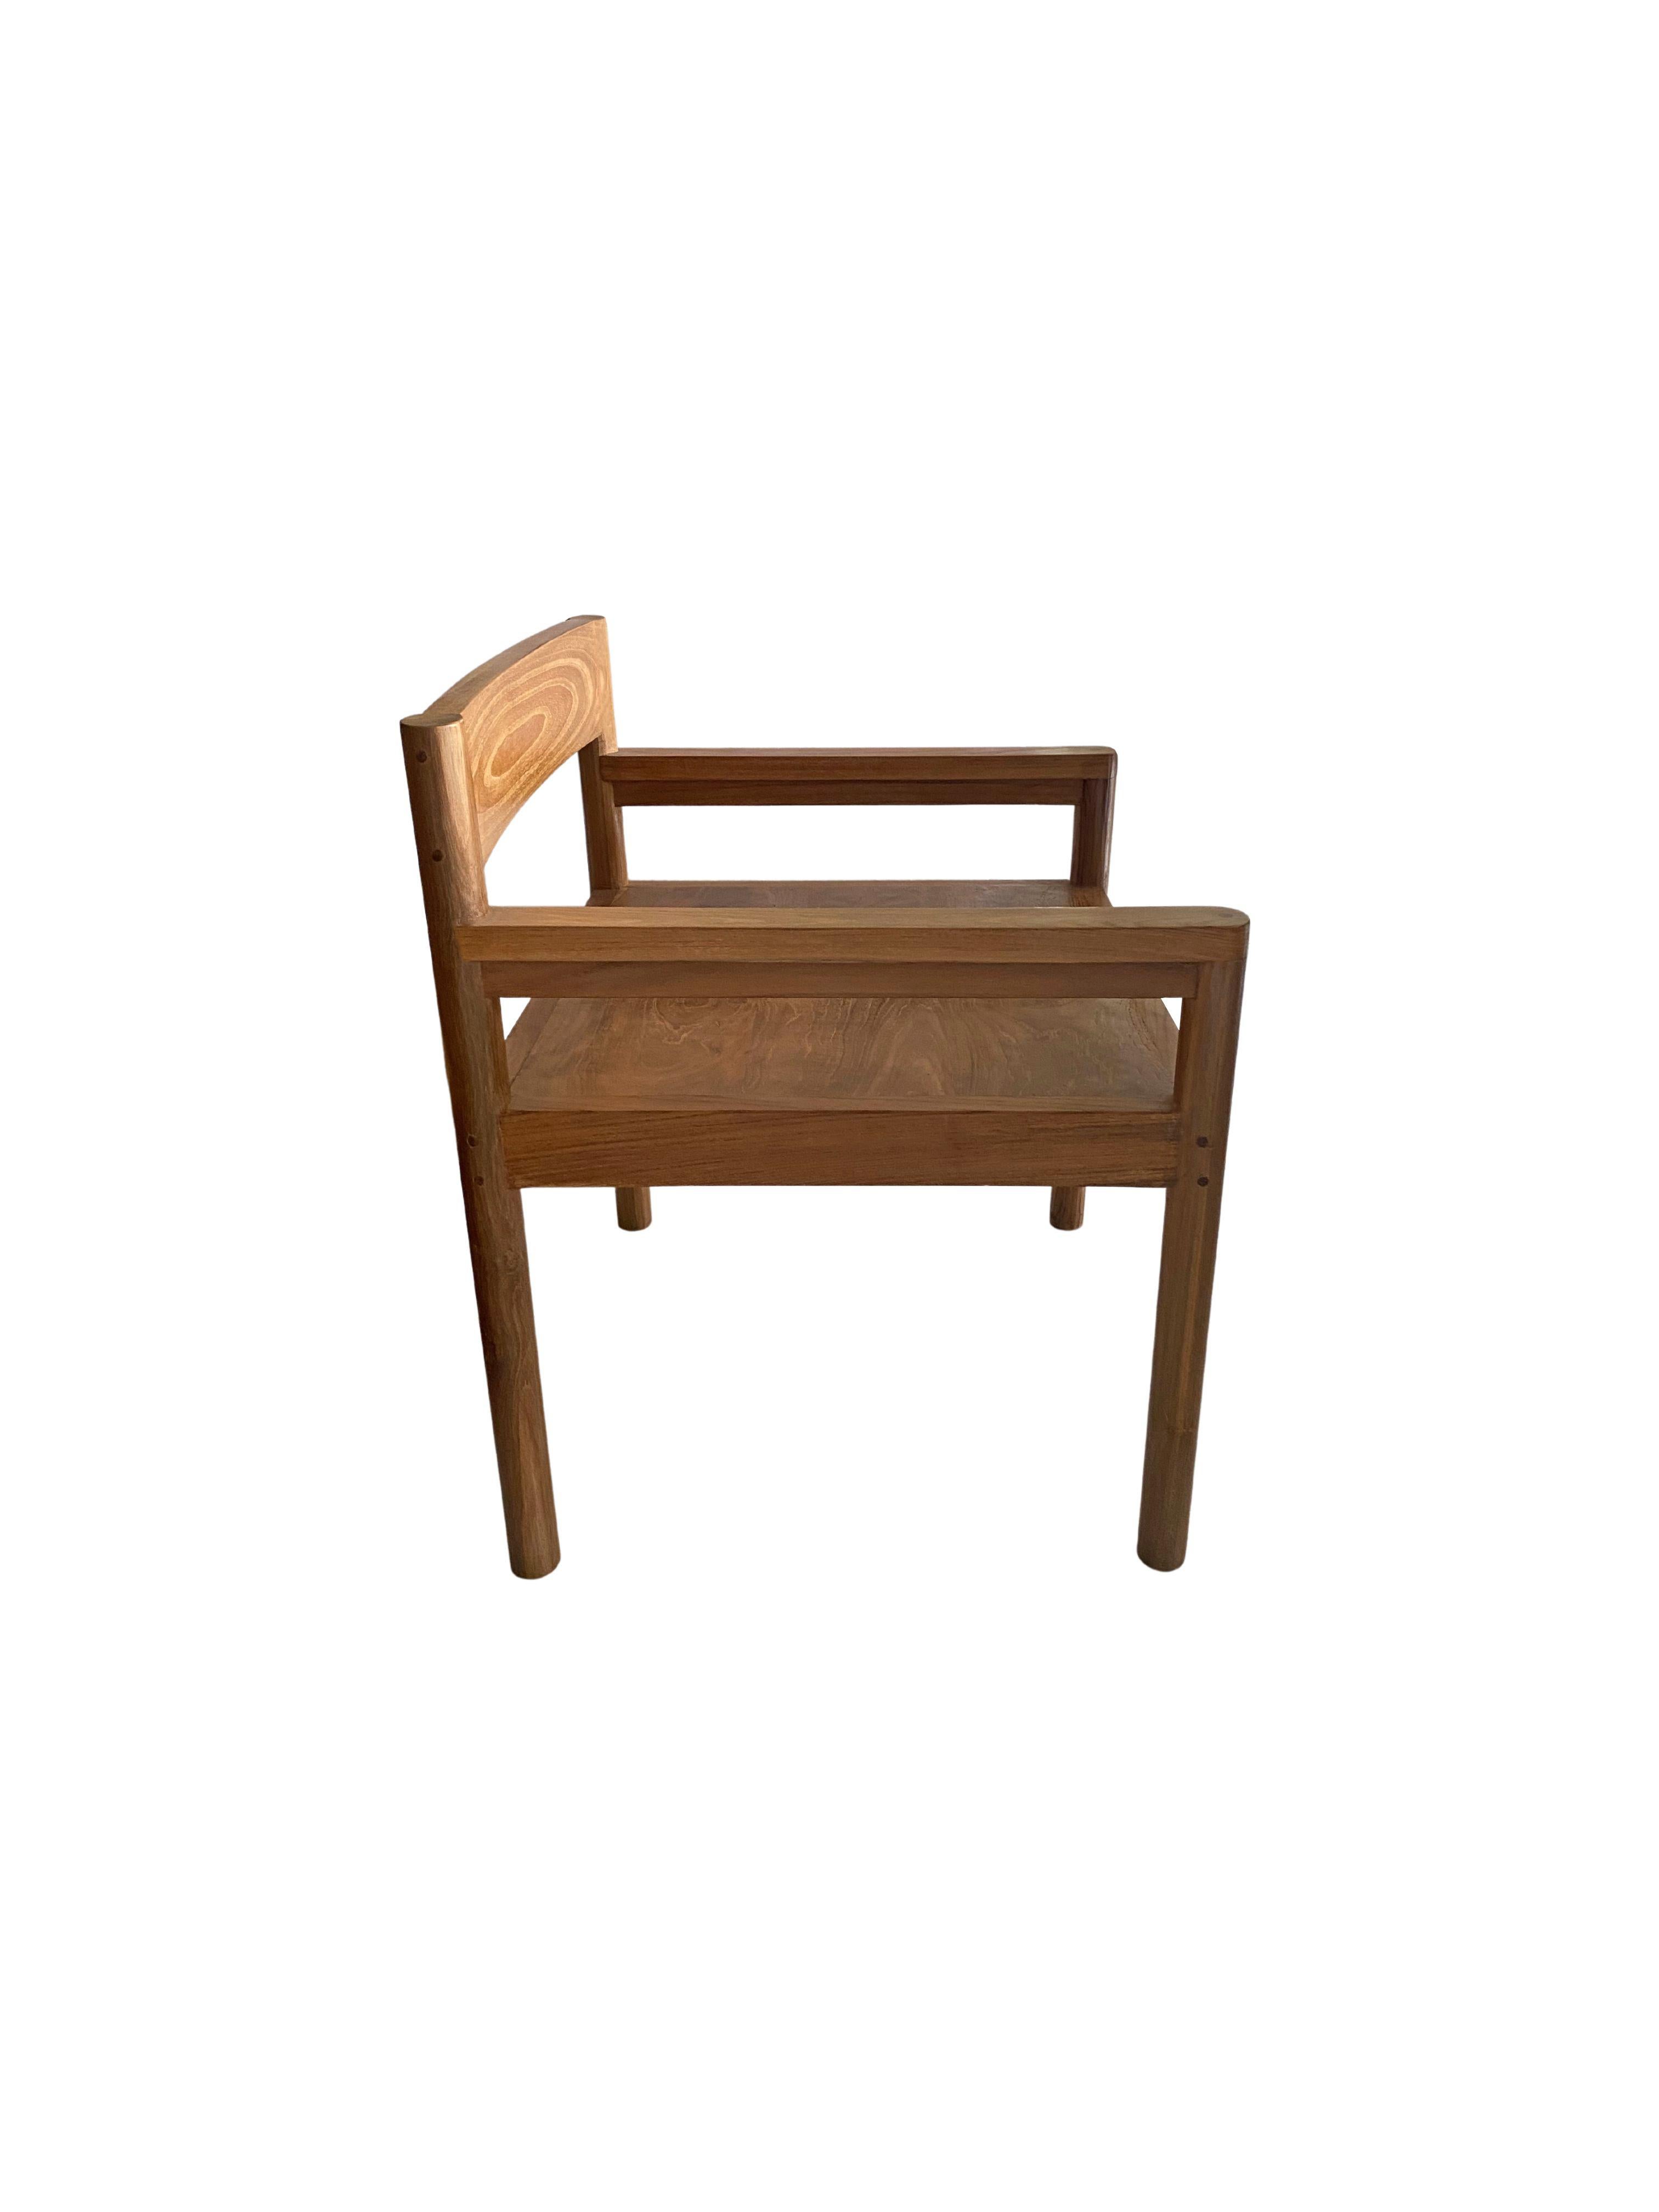 Indonesian Modern Teak Wood Chair With stunning Wood Pattern Detailing